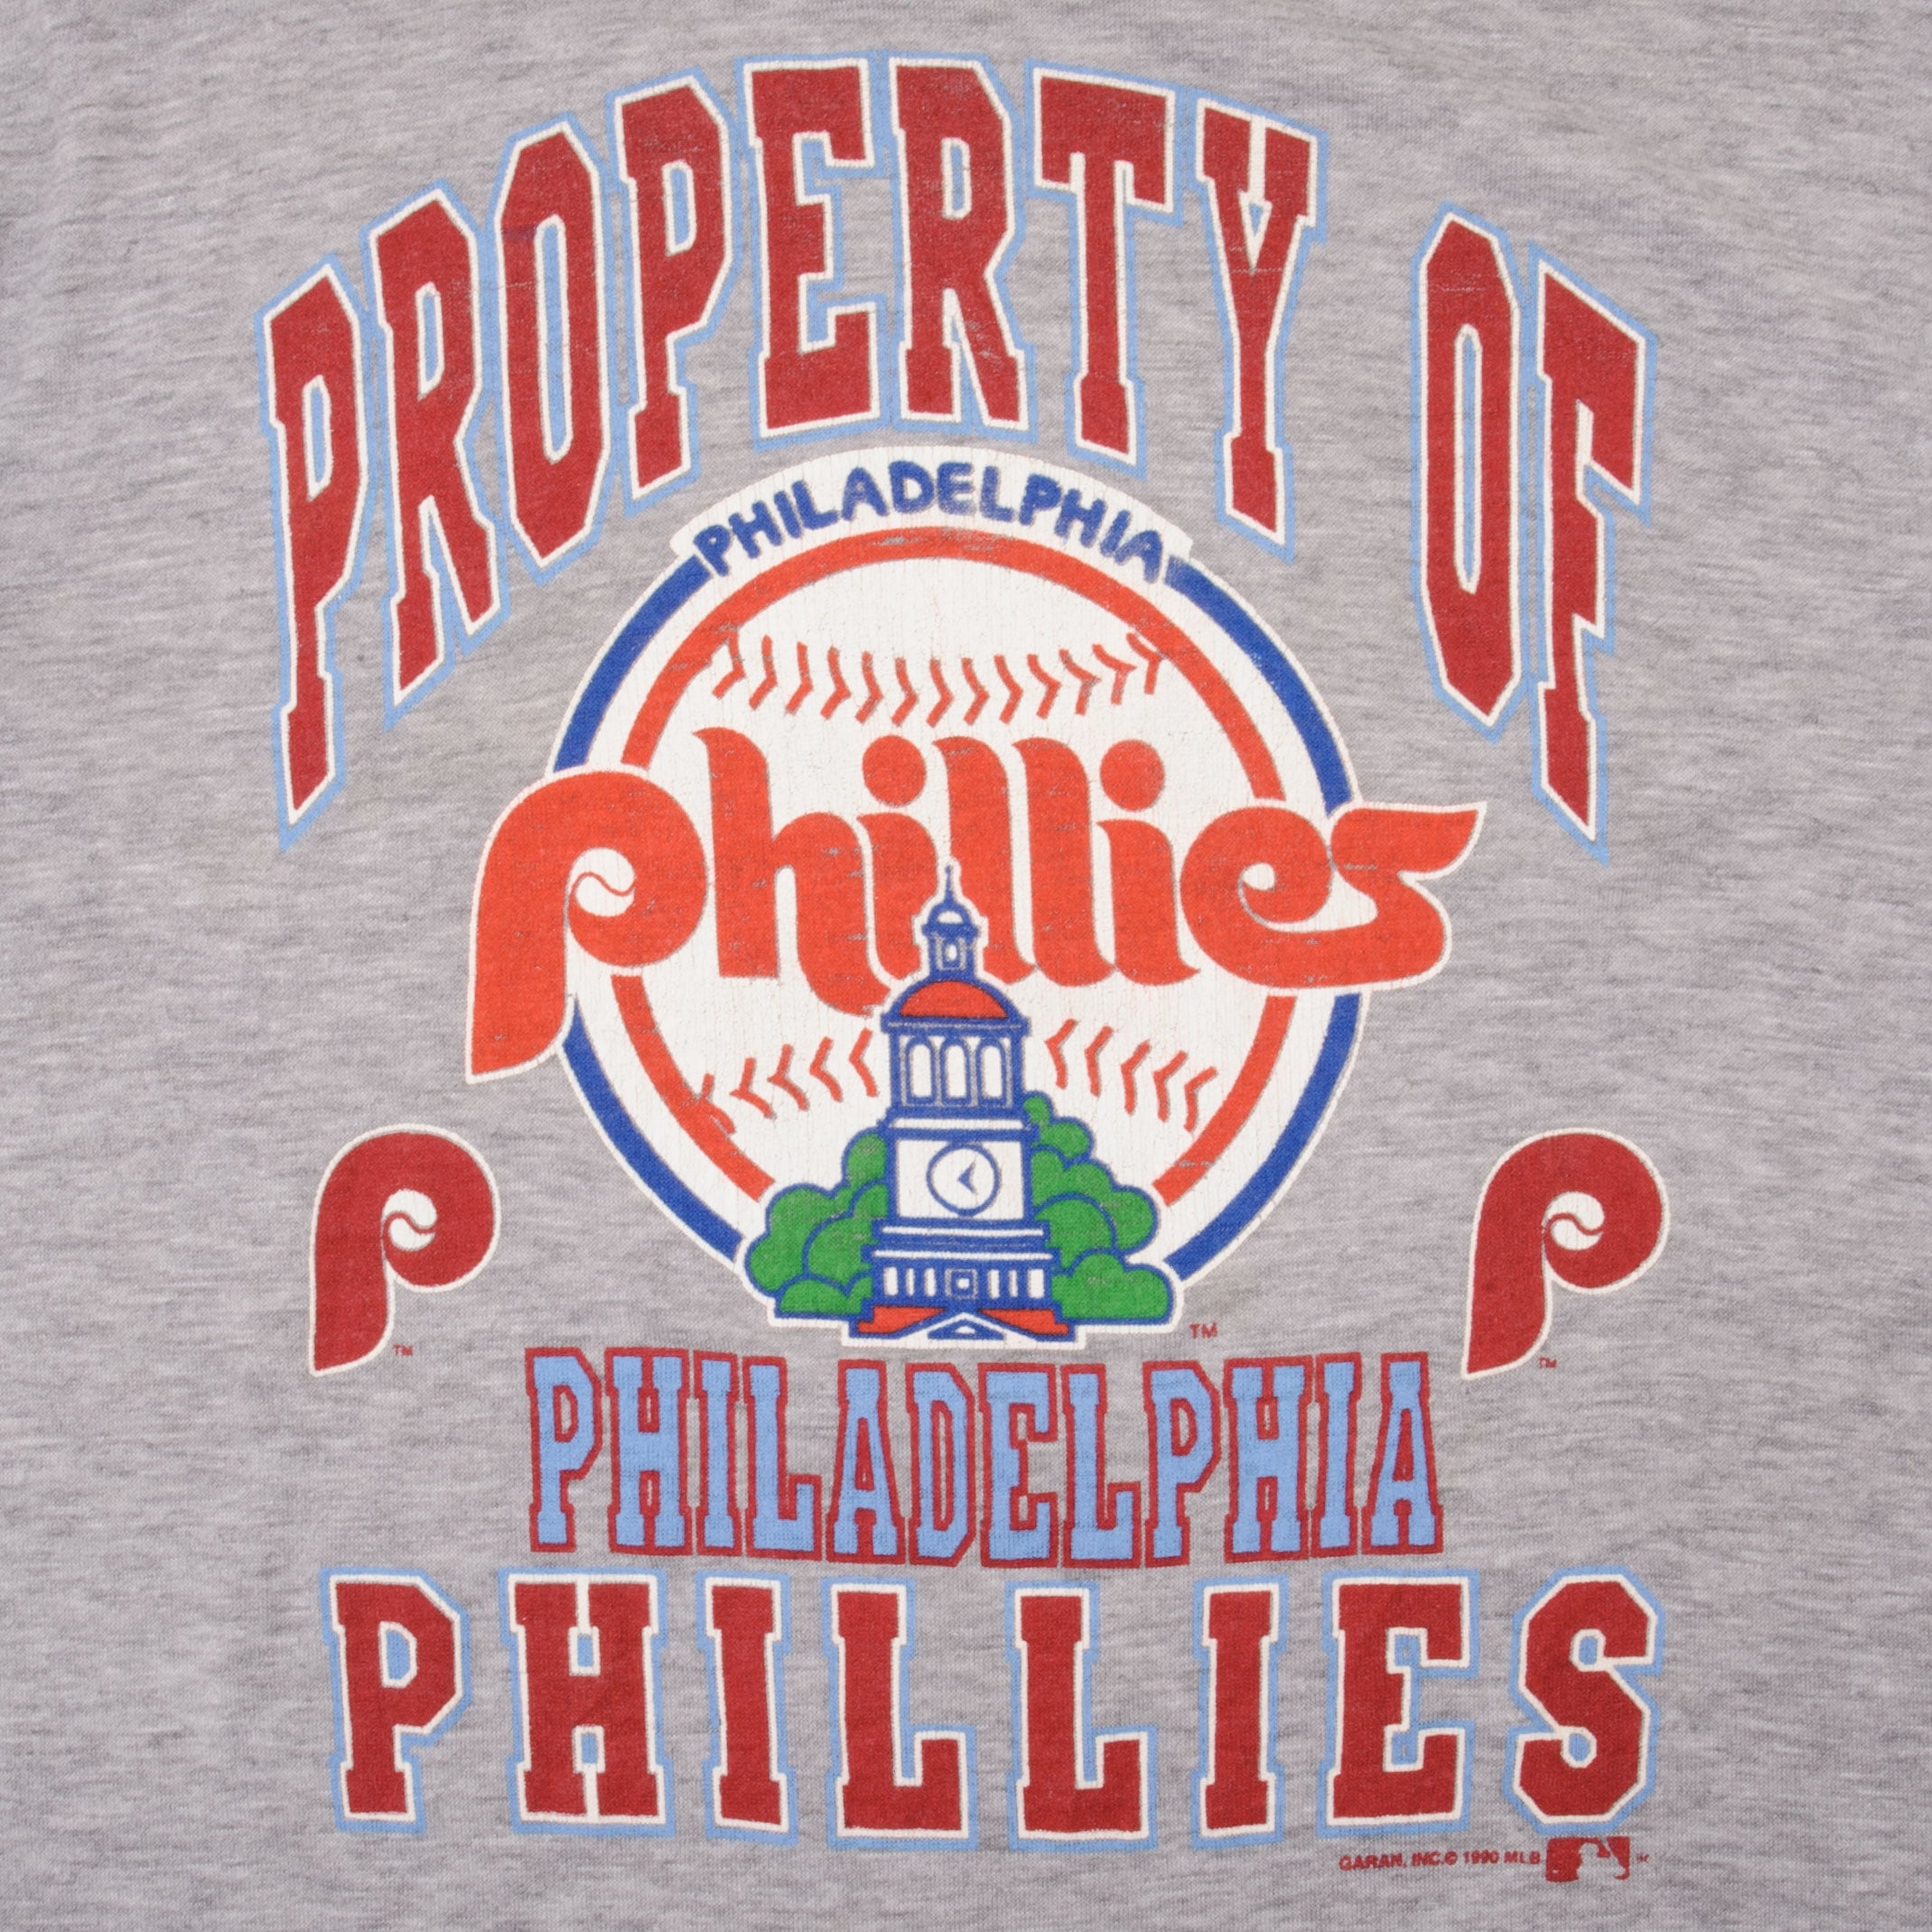 VTG Philadelphia Phillies Mens USA Made MLB Baseball Sewn #6 Jersey Size XL